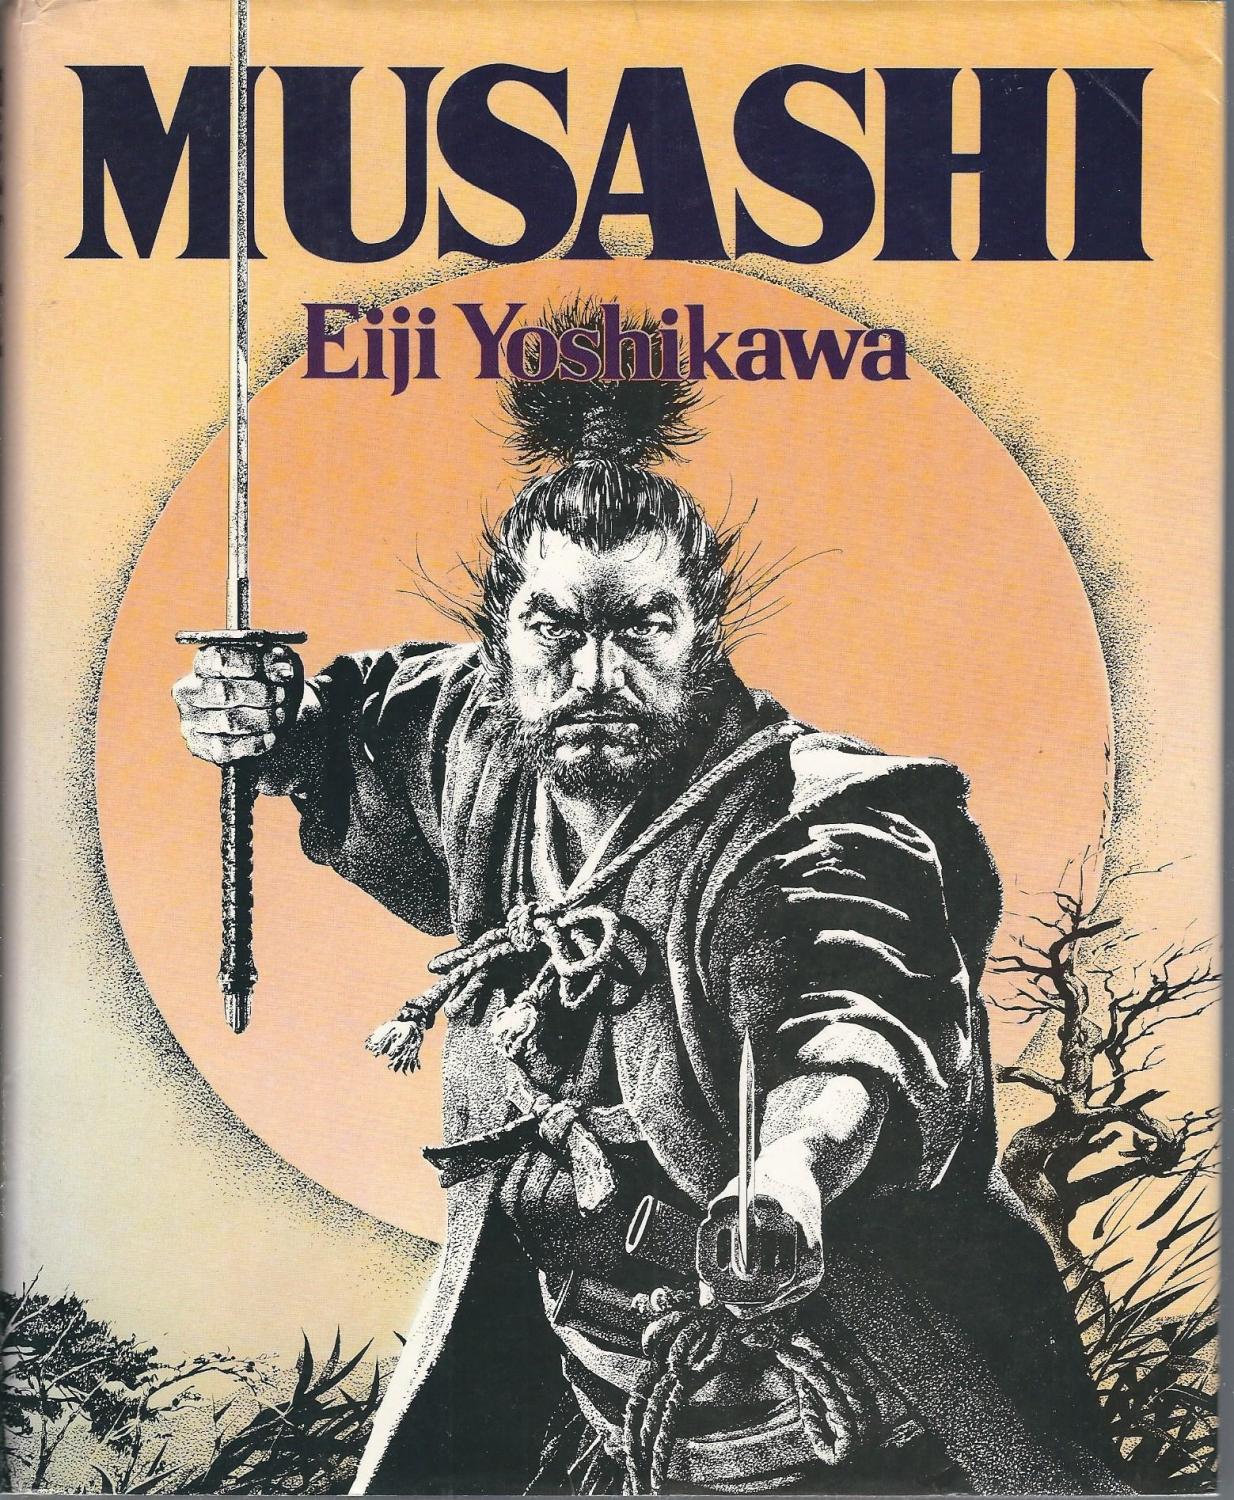 BOX MUSASHI (3 VOLUMES): TERRA, AGUA, FOGO / VENTO, CEU / AS DUAS FORÇAS, A  HARMONIA FINAL - 1ªED.(2008) - Eiji Yoshikawa - Livro